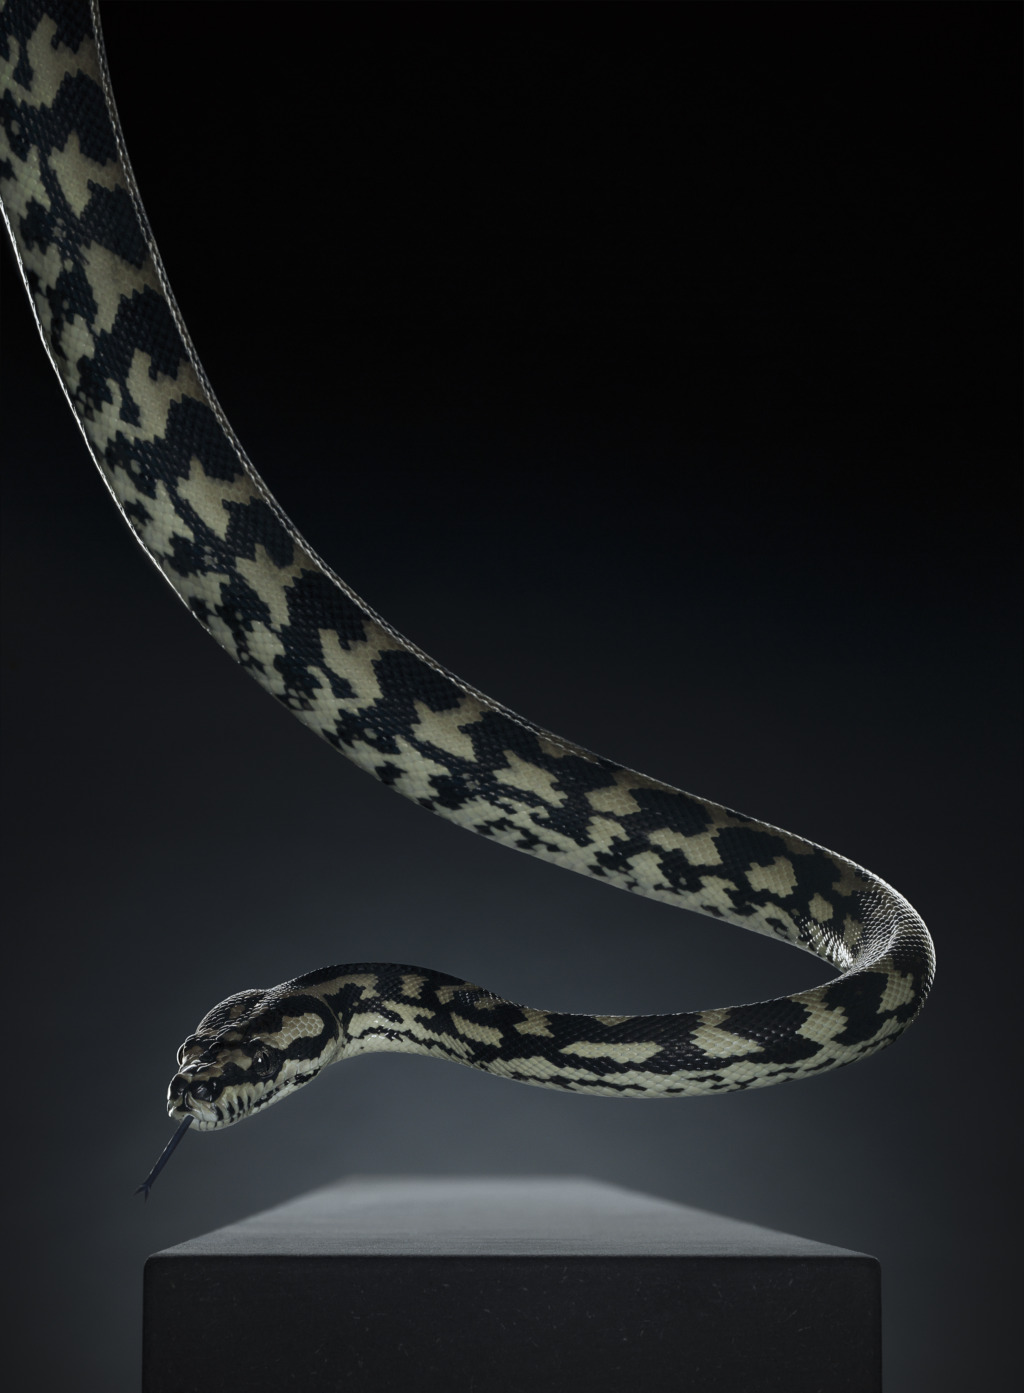 Peter Hebeisen
Snake, 2012, Pigment print on Archival paper, 218 x 160 cm 